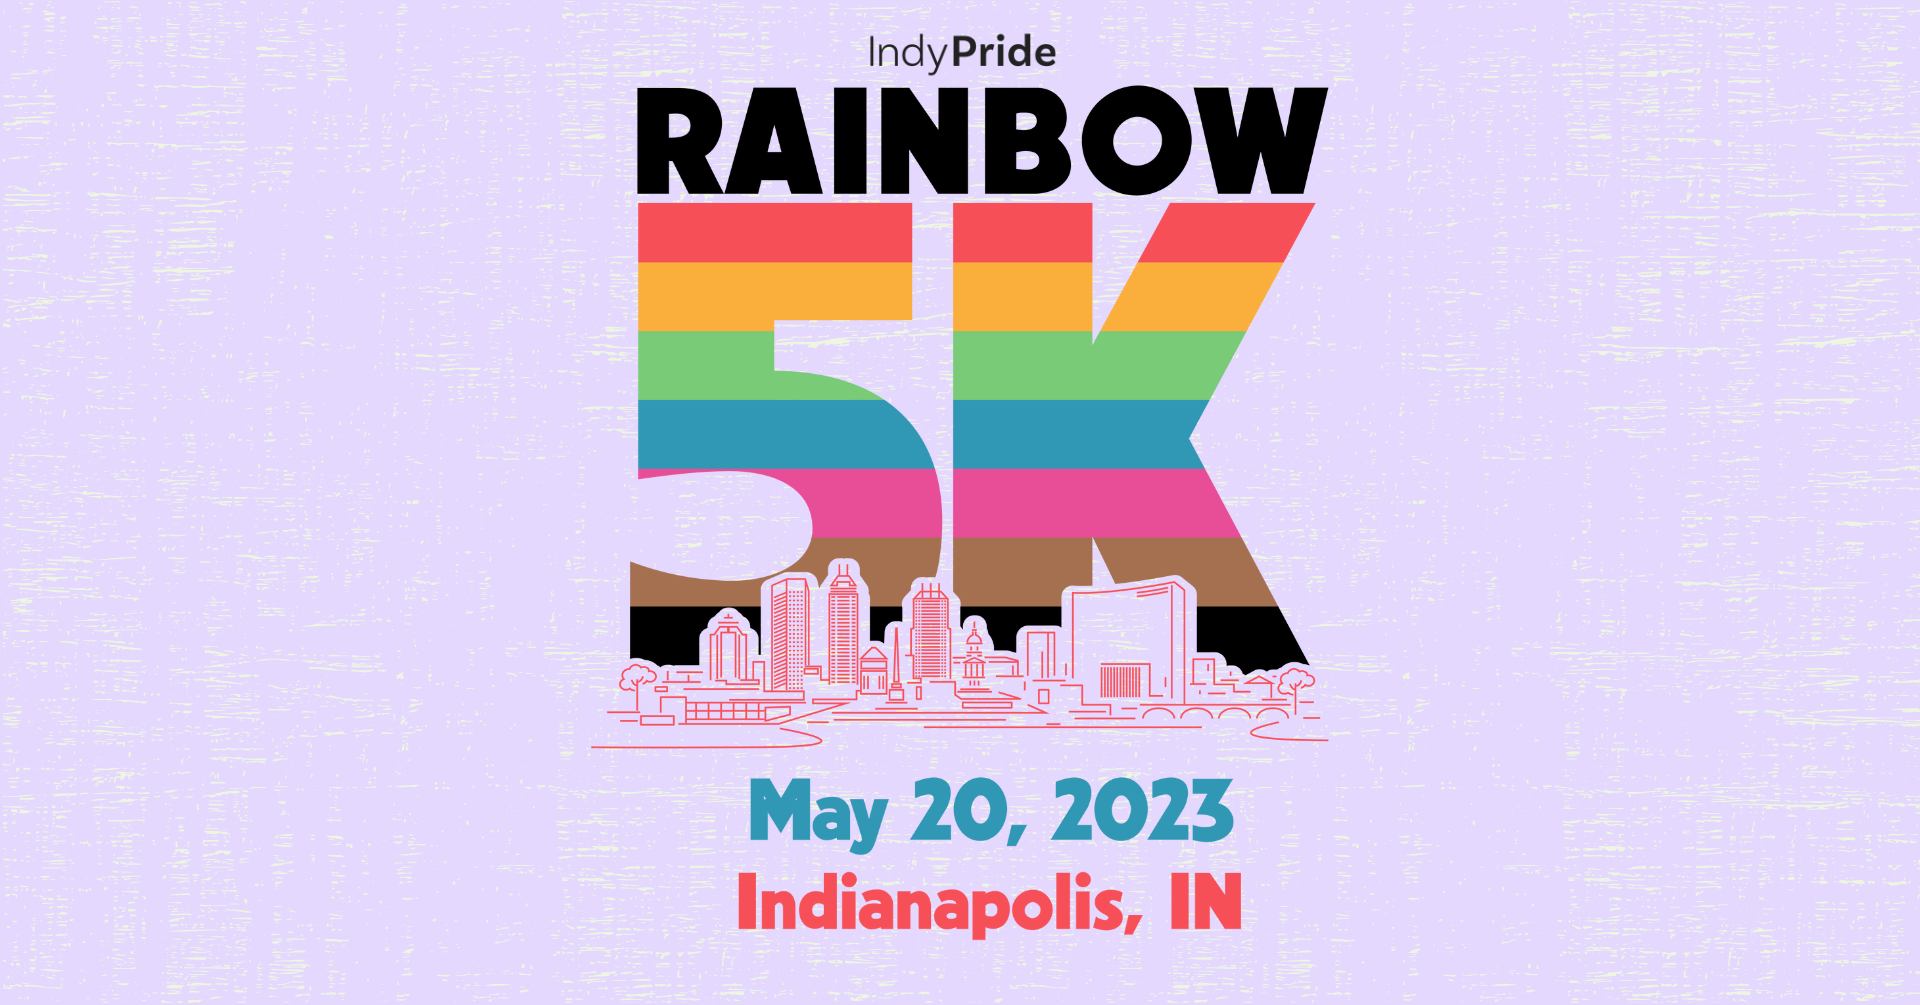 Indy Pride Rainbow 5K Run/Walk presented by High Alpha Indy Pride, Inc.